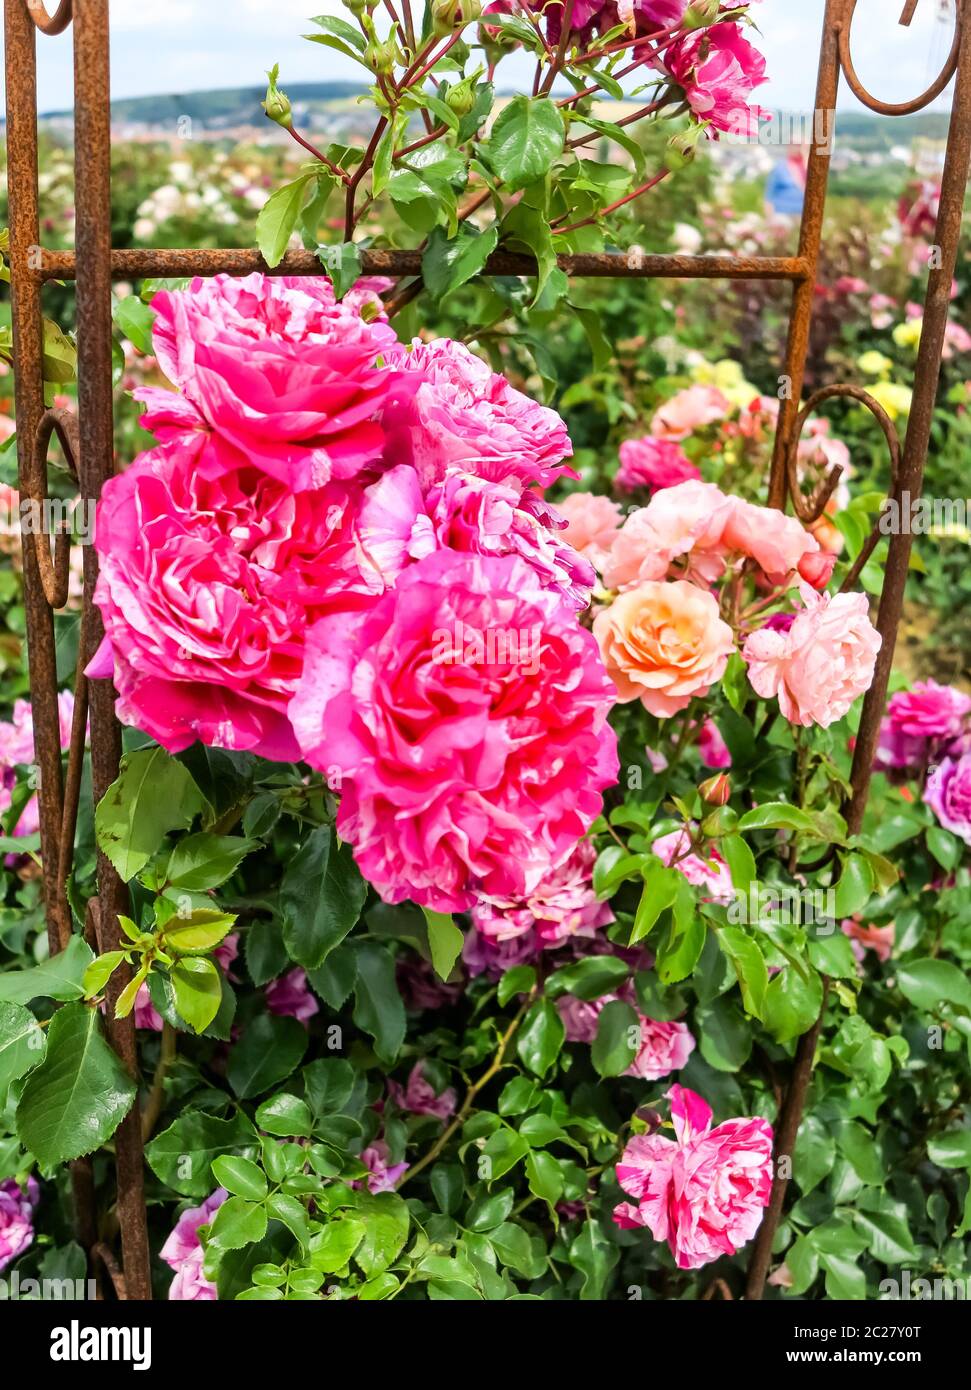 Tall pink climbing rose shrub in a rose garden Stock Photo